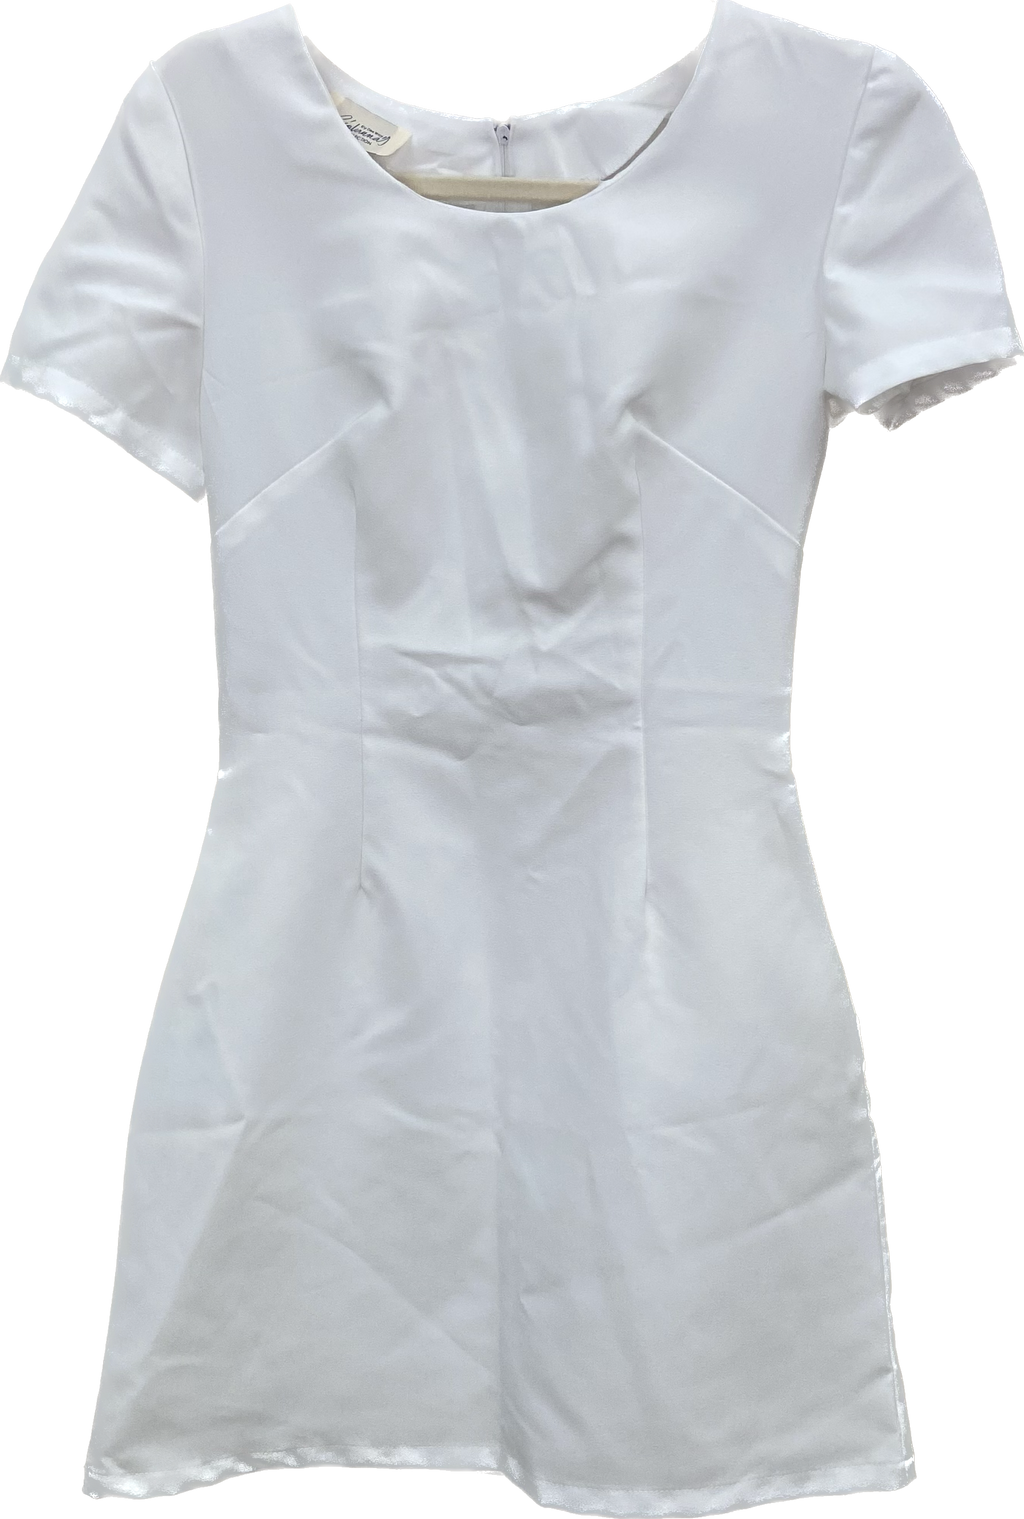 vintage white short sleeve dress